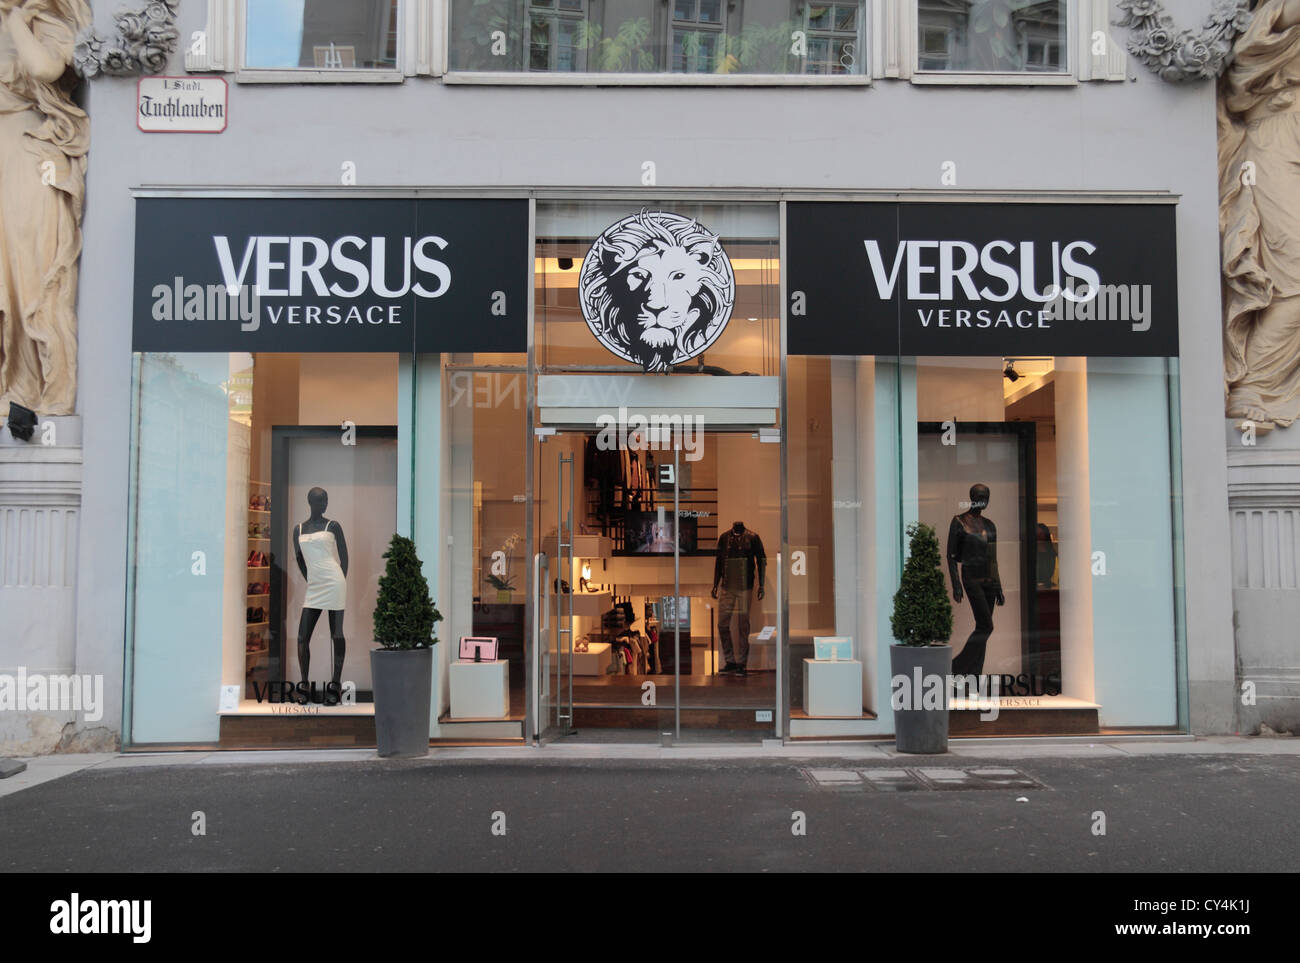 The Versus Versace shop in Vienna, Austria Stock Photo - Alamy